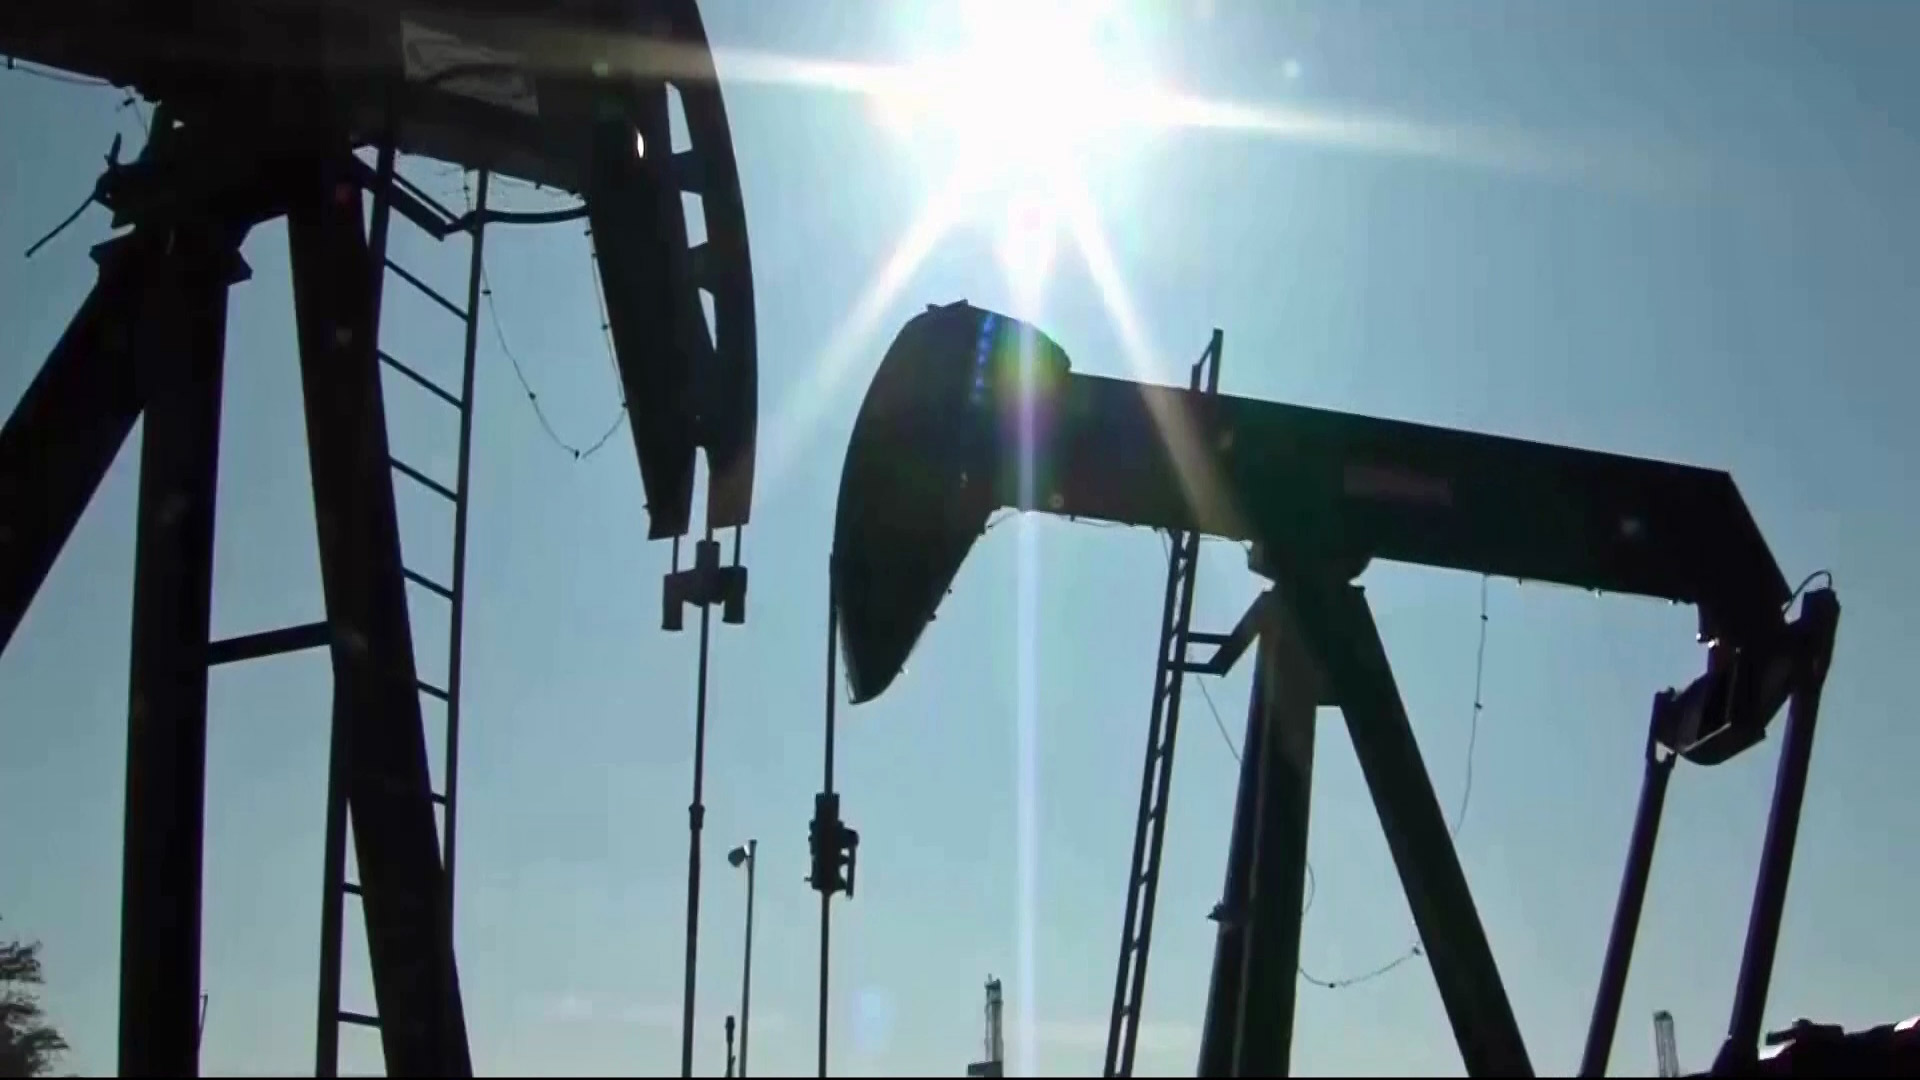 Newsom Administration Calls For Banning New Oil Drilling Near Neighborhoods, Schools